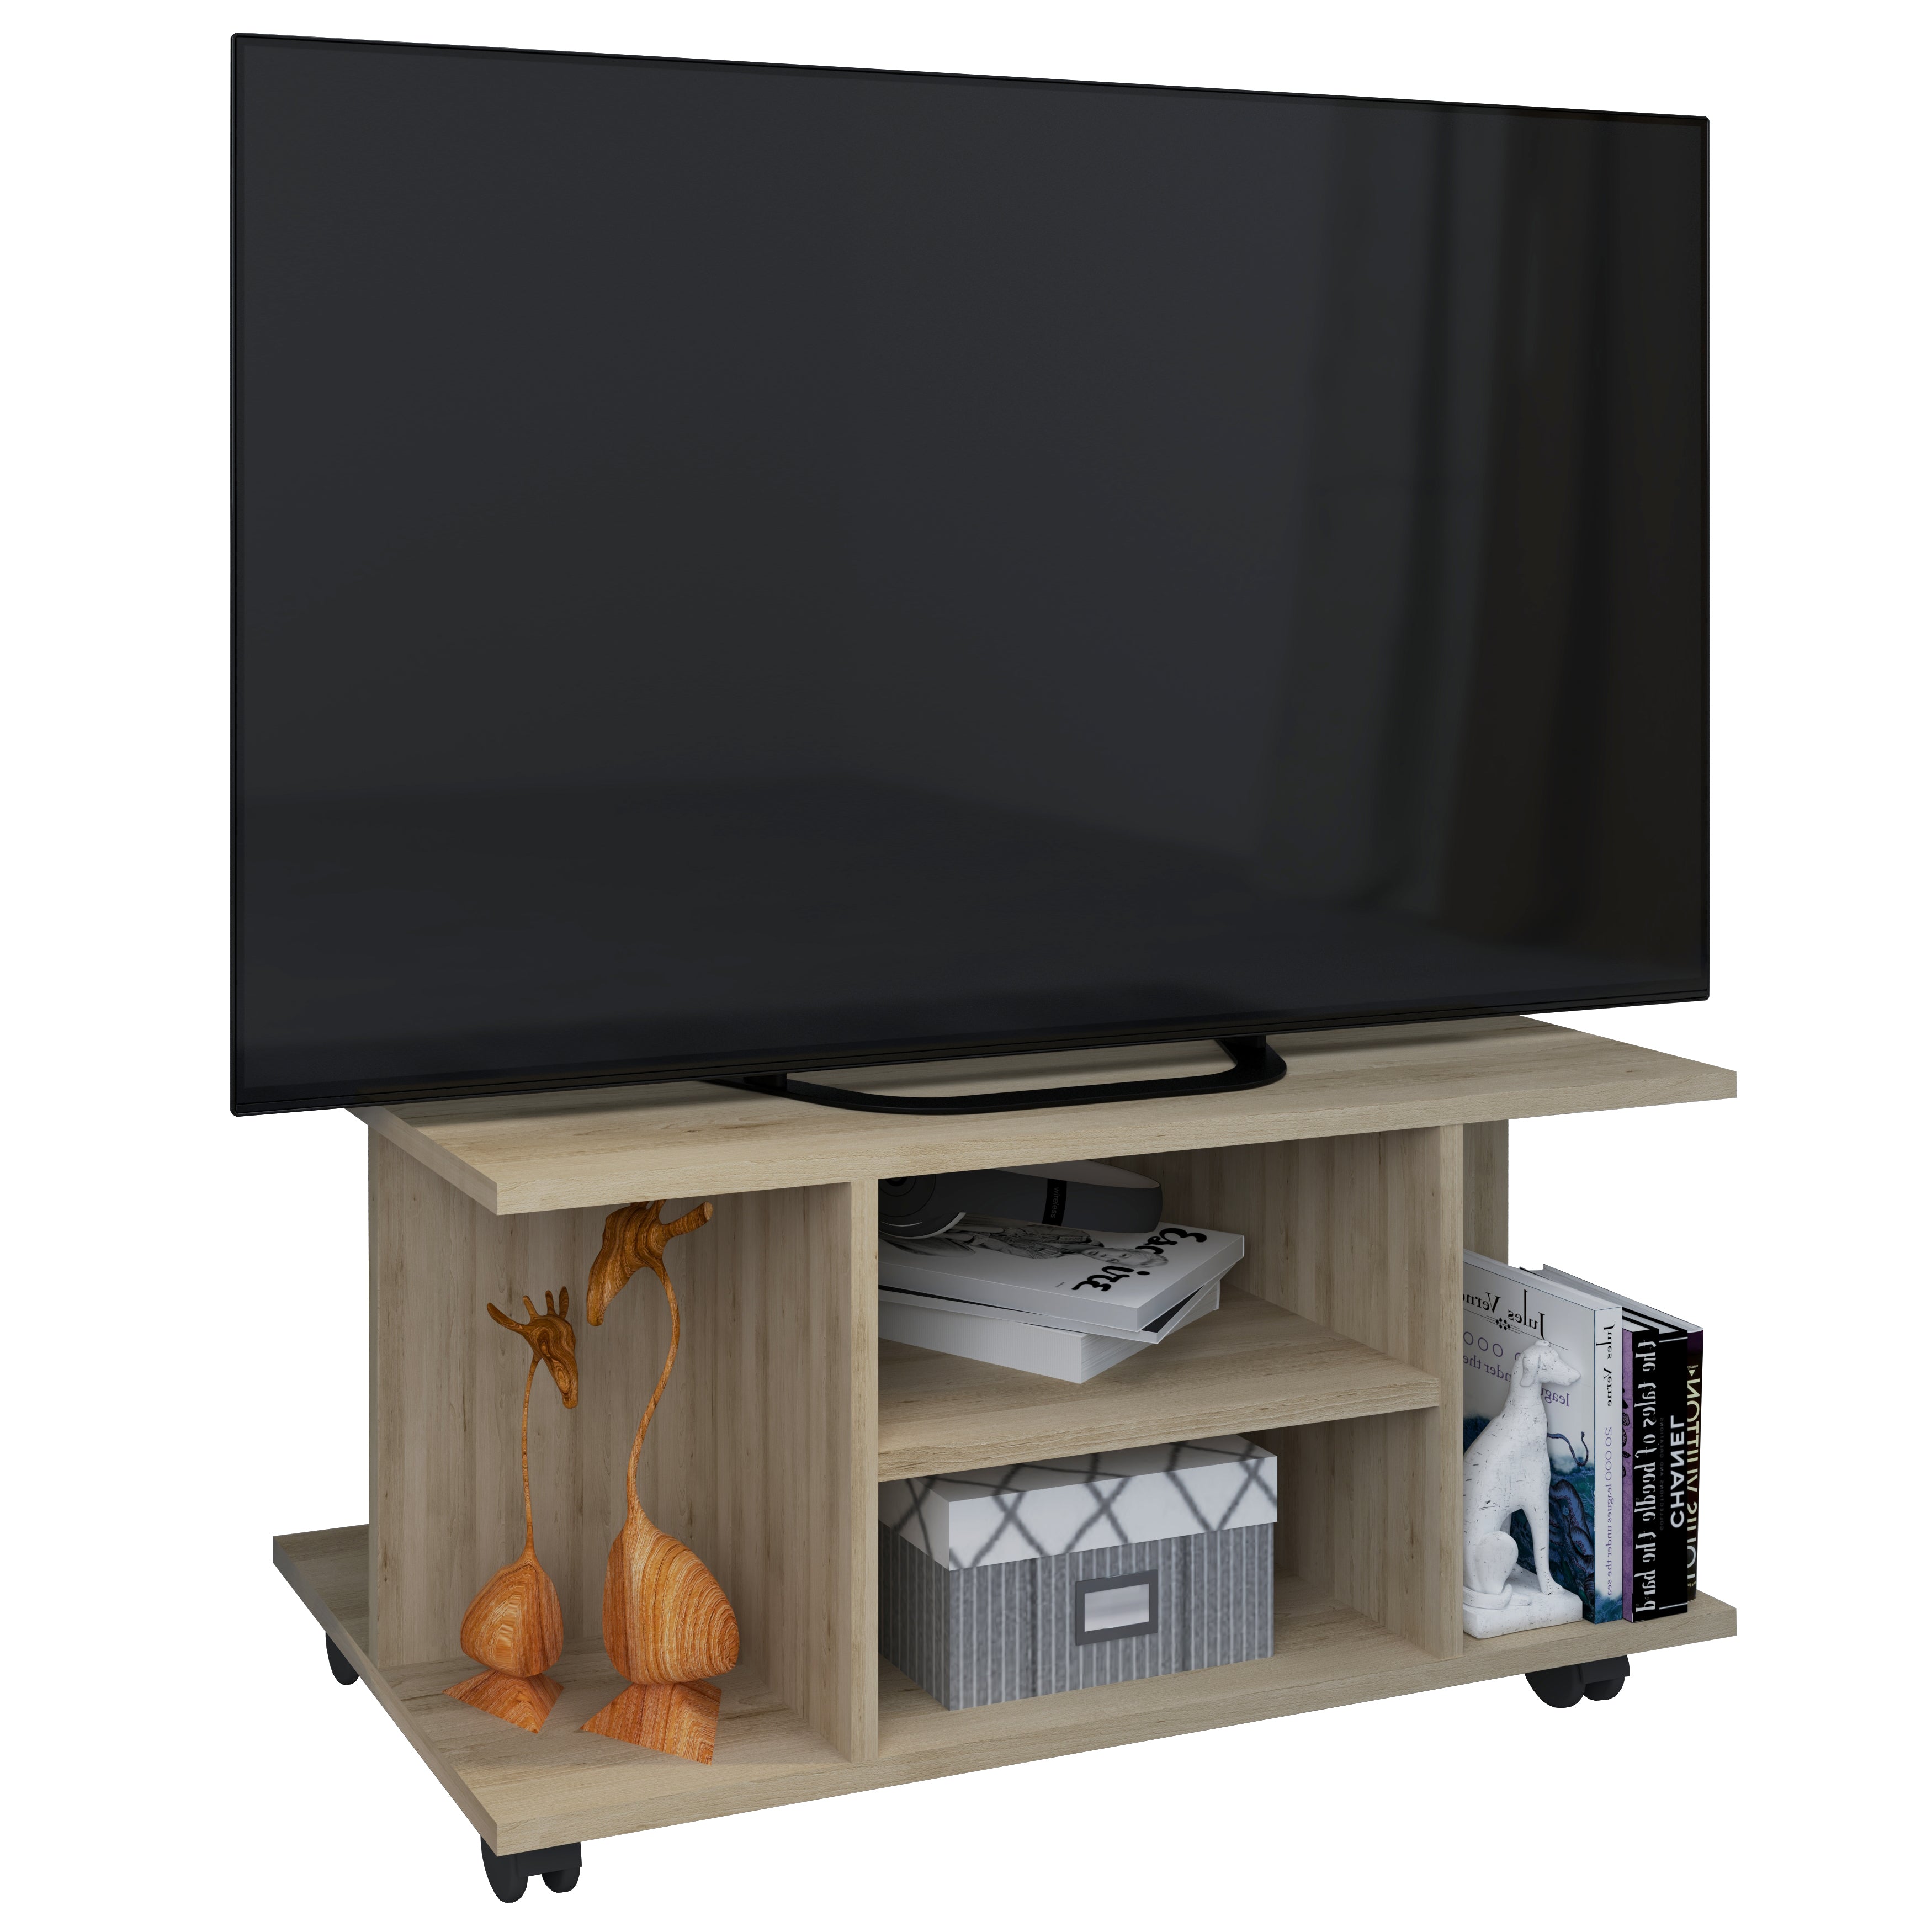 #2 - TV-bord med hjul, h. 40 x b. 80 x d. 40 cm, naturfarvet